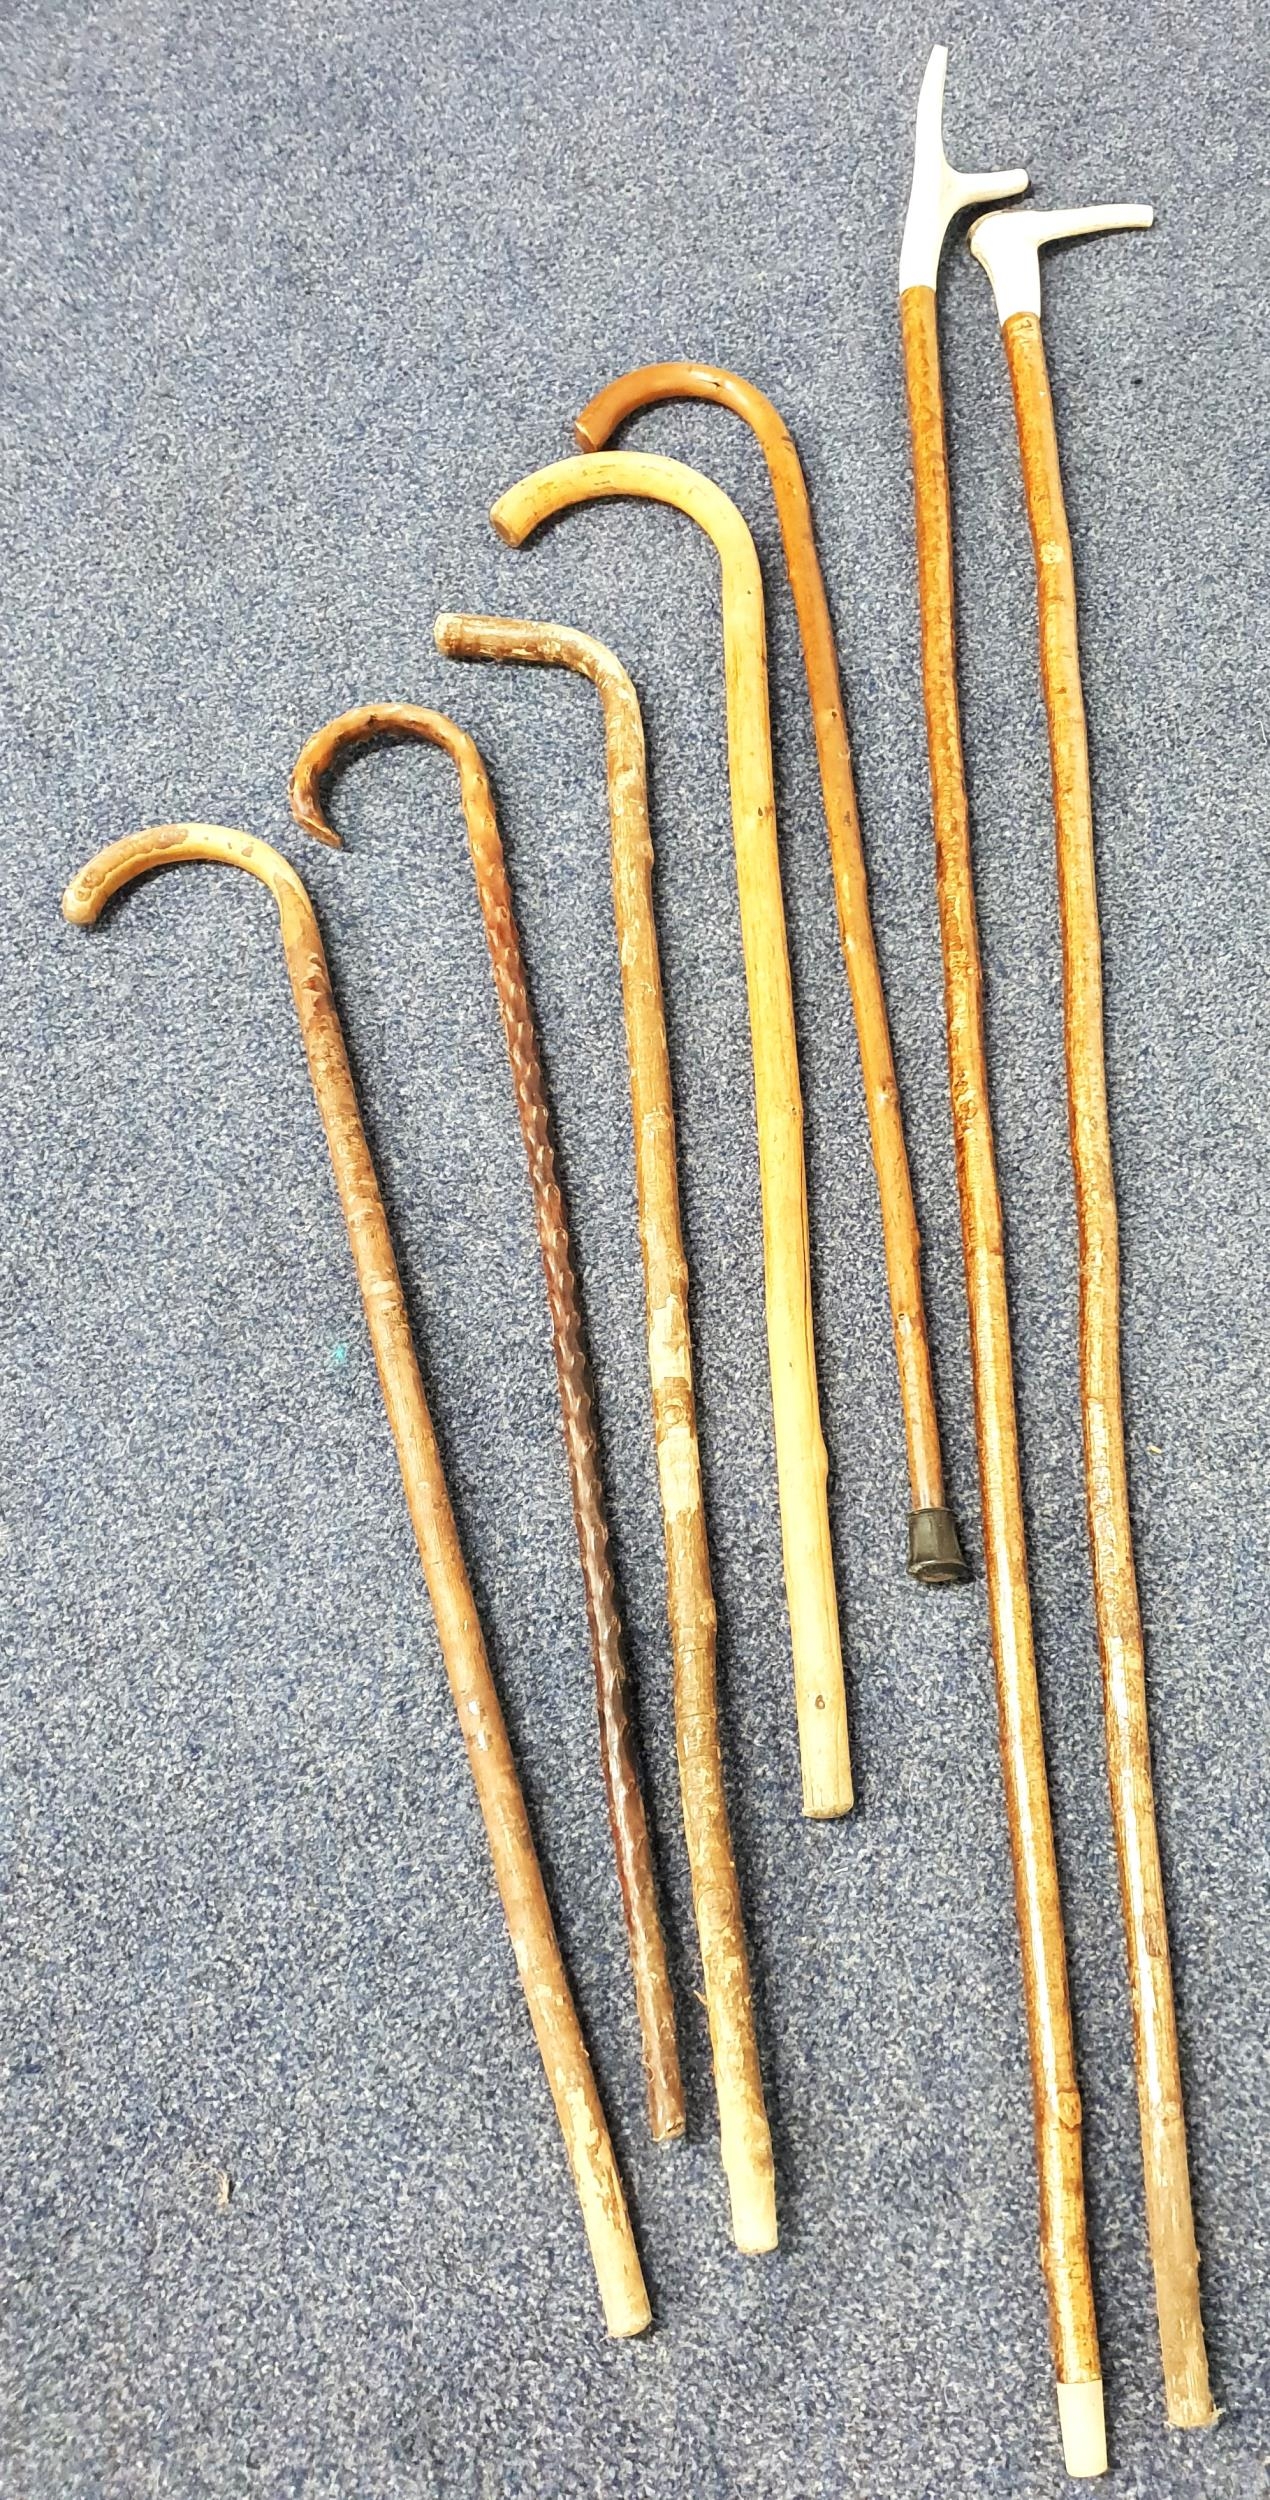 HORN HANDLED THUMB STICK with a hazel shaft, 140cm high, a horn handled walking stick with a hazel